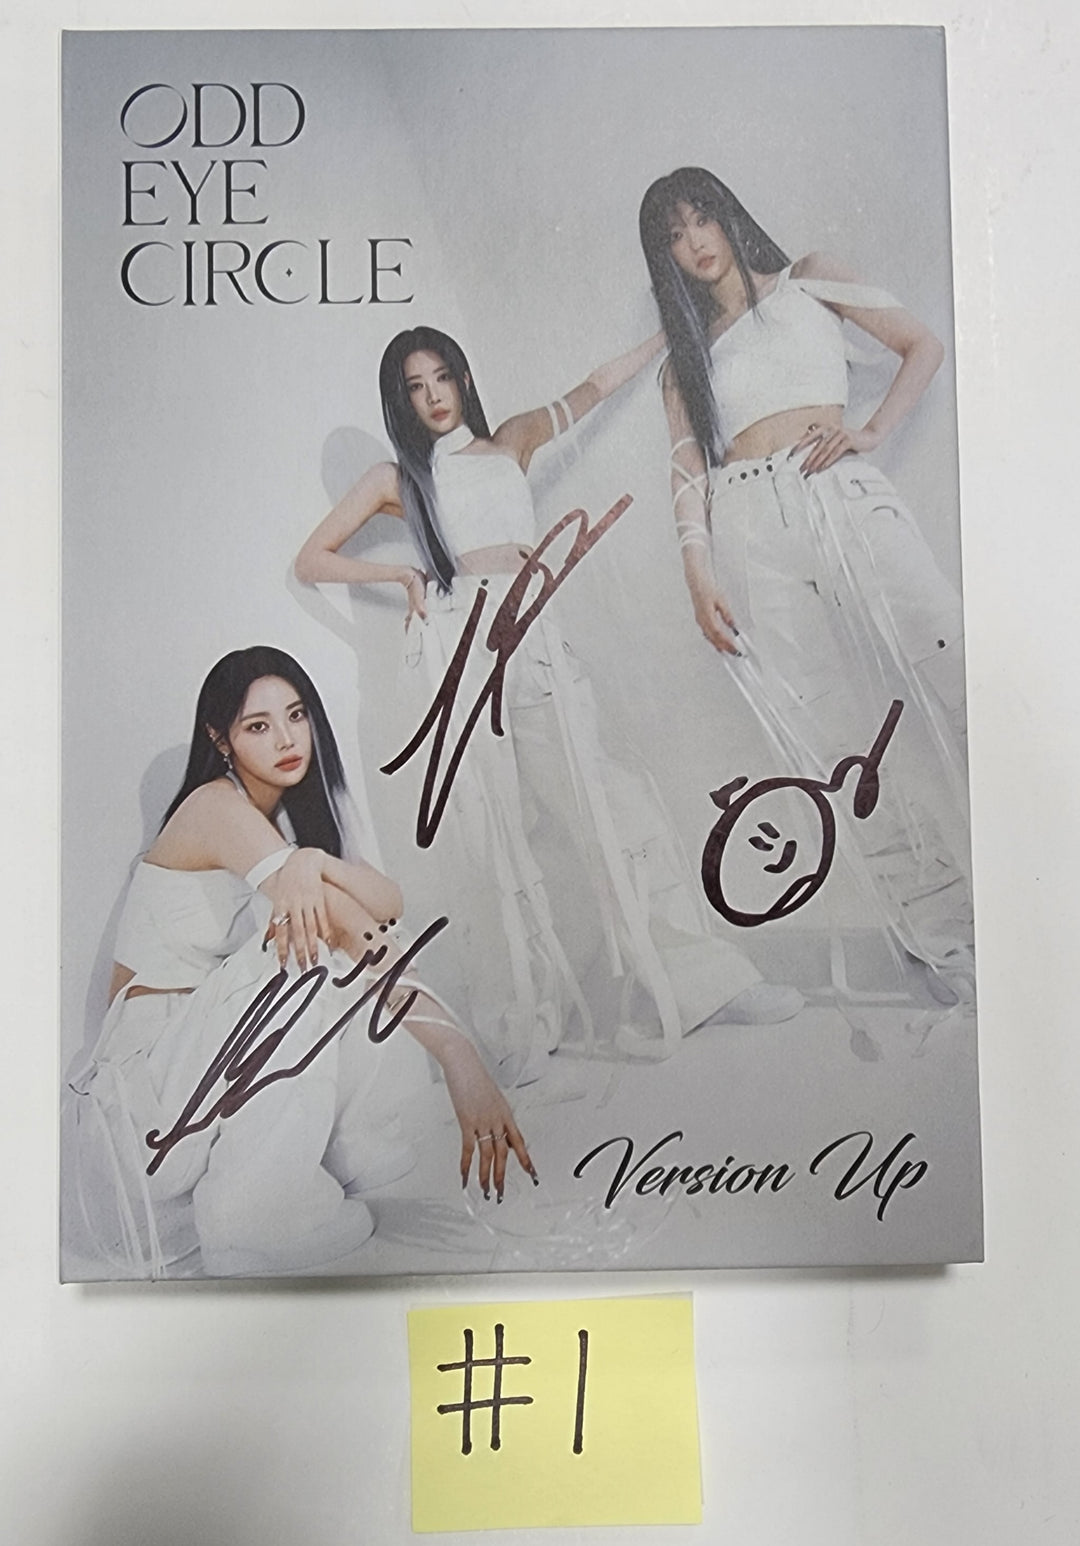 ODD EYE CIRCLE "Version Up"- Hand Autographed(Signed) Promo Album